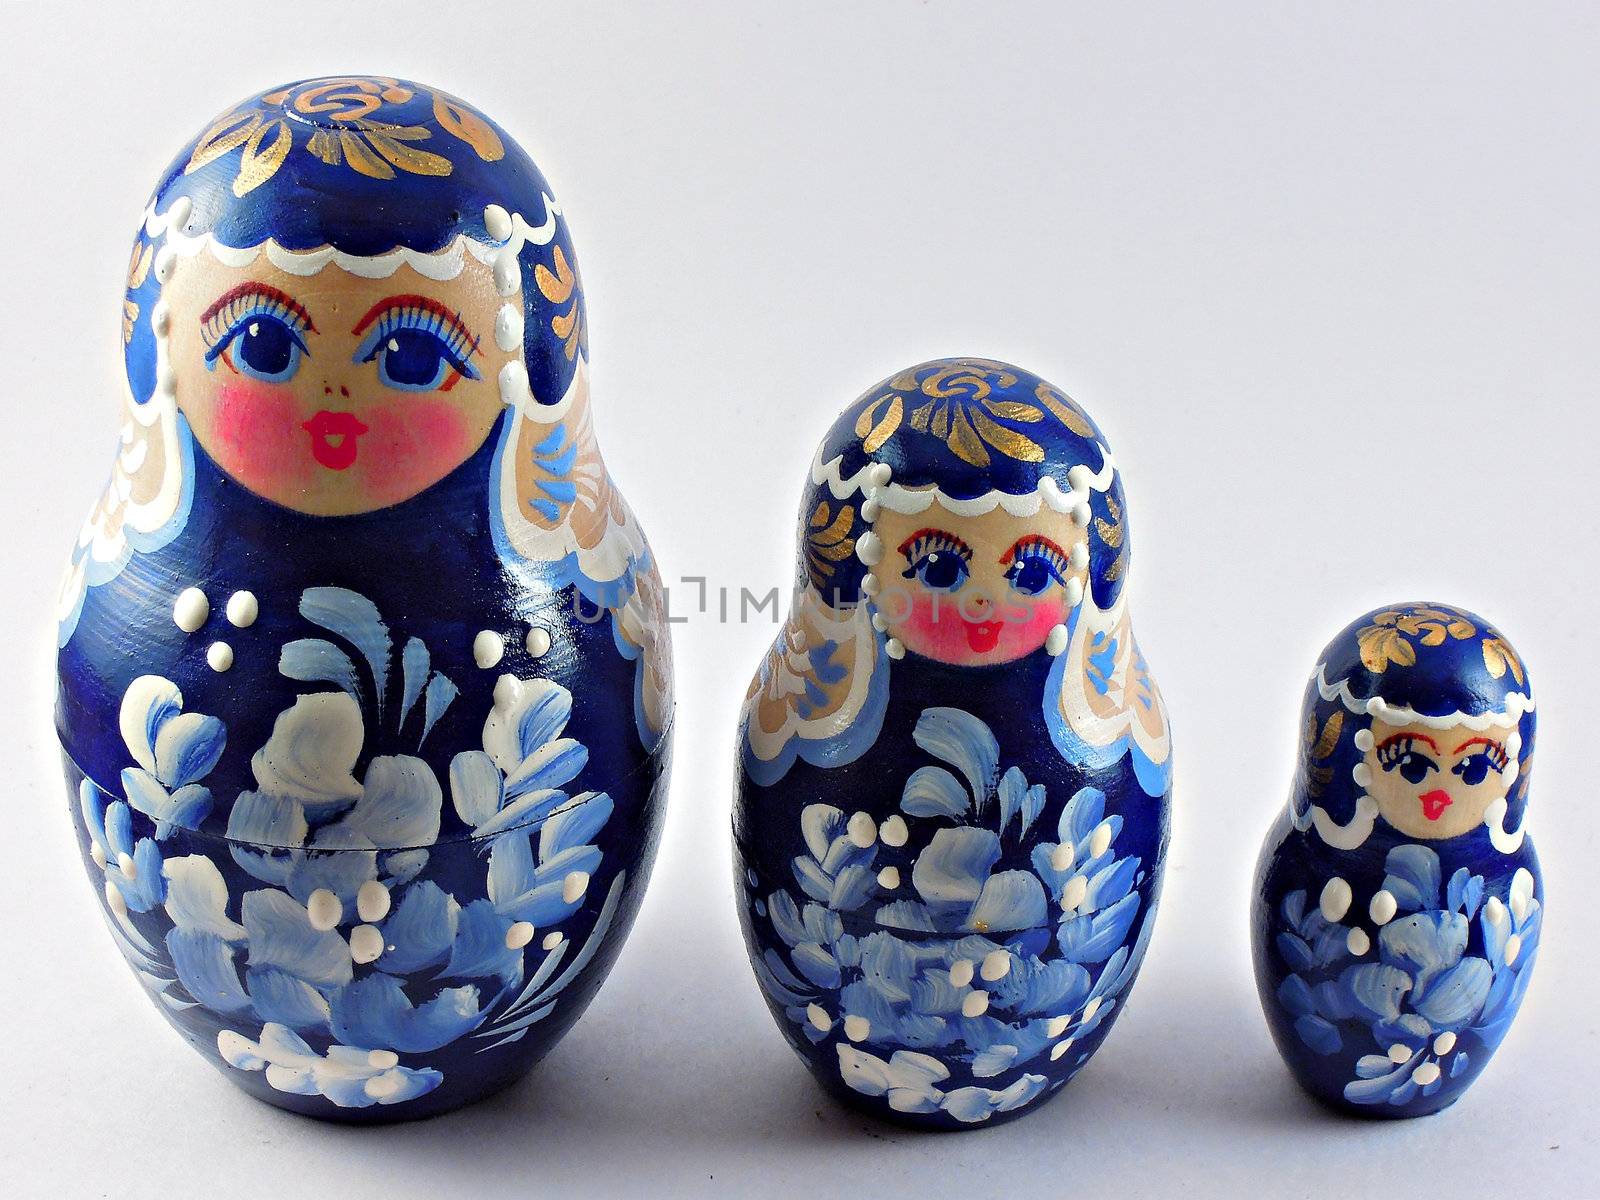 Russian dolls by Picnichok